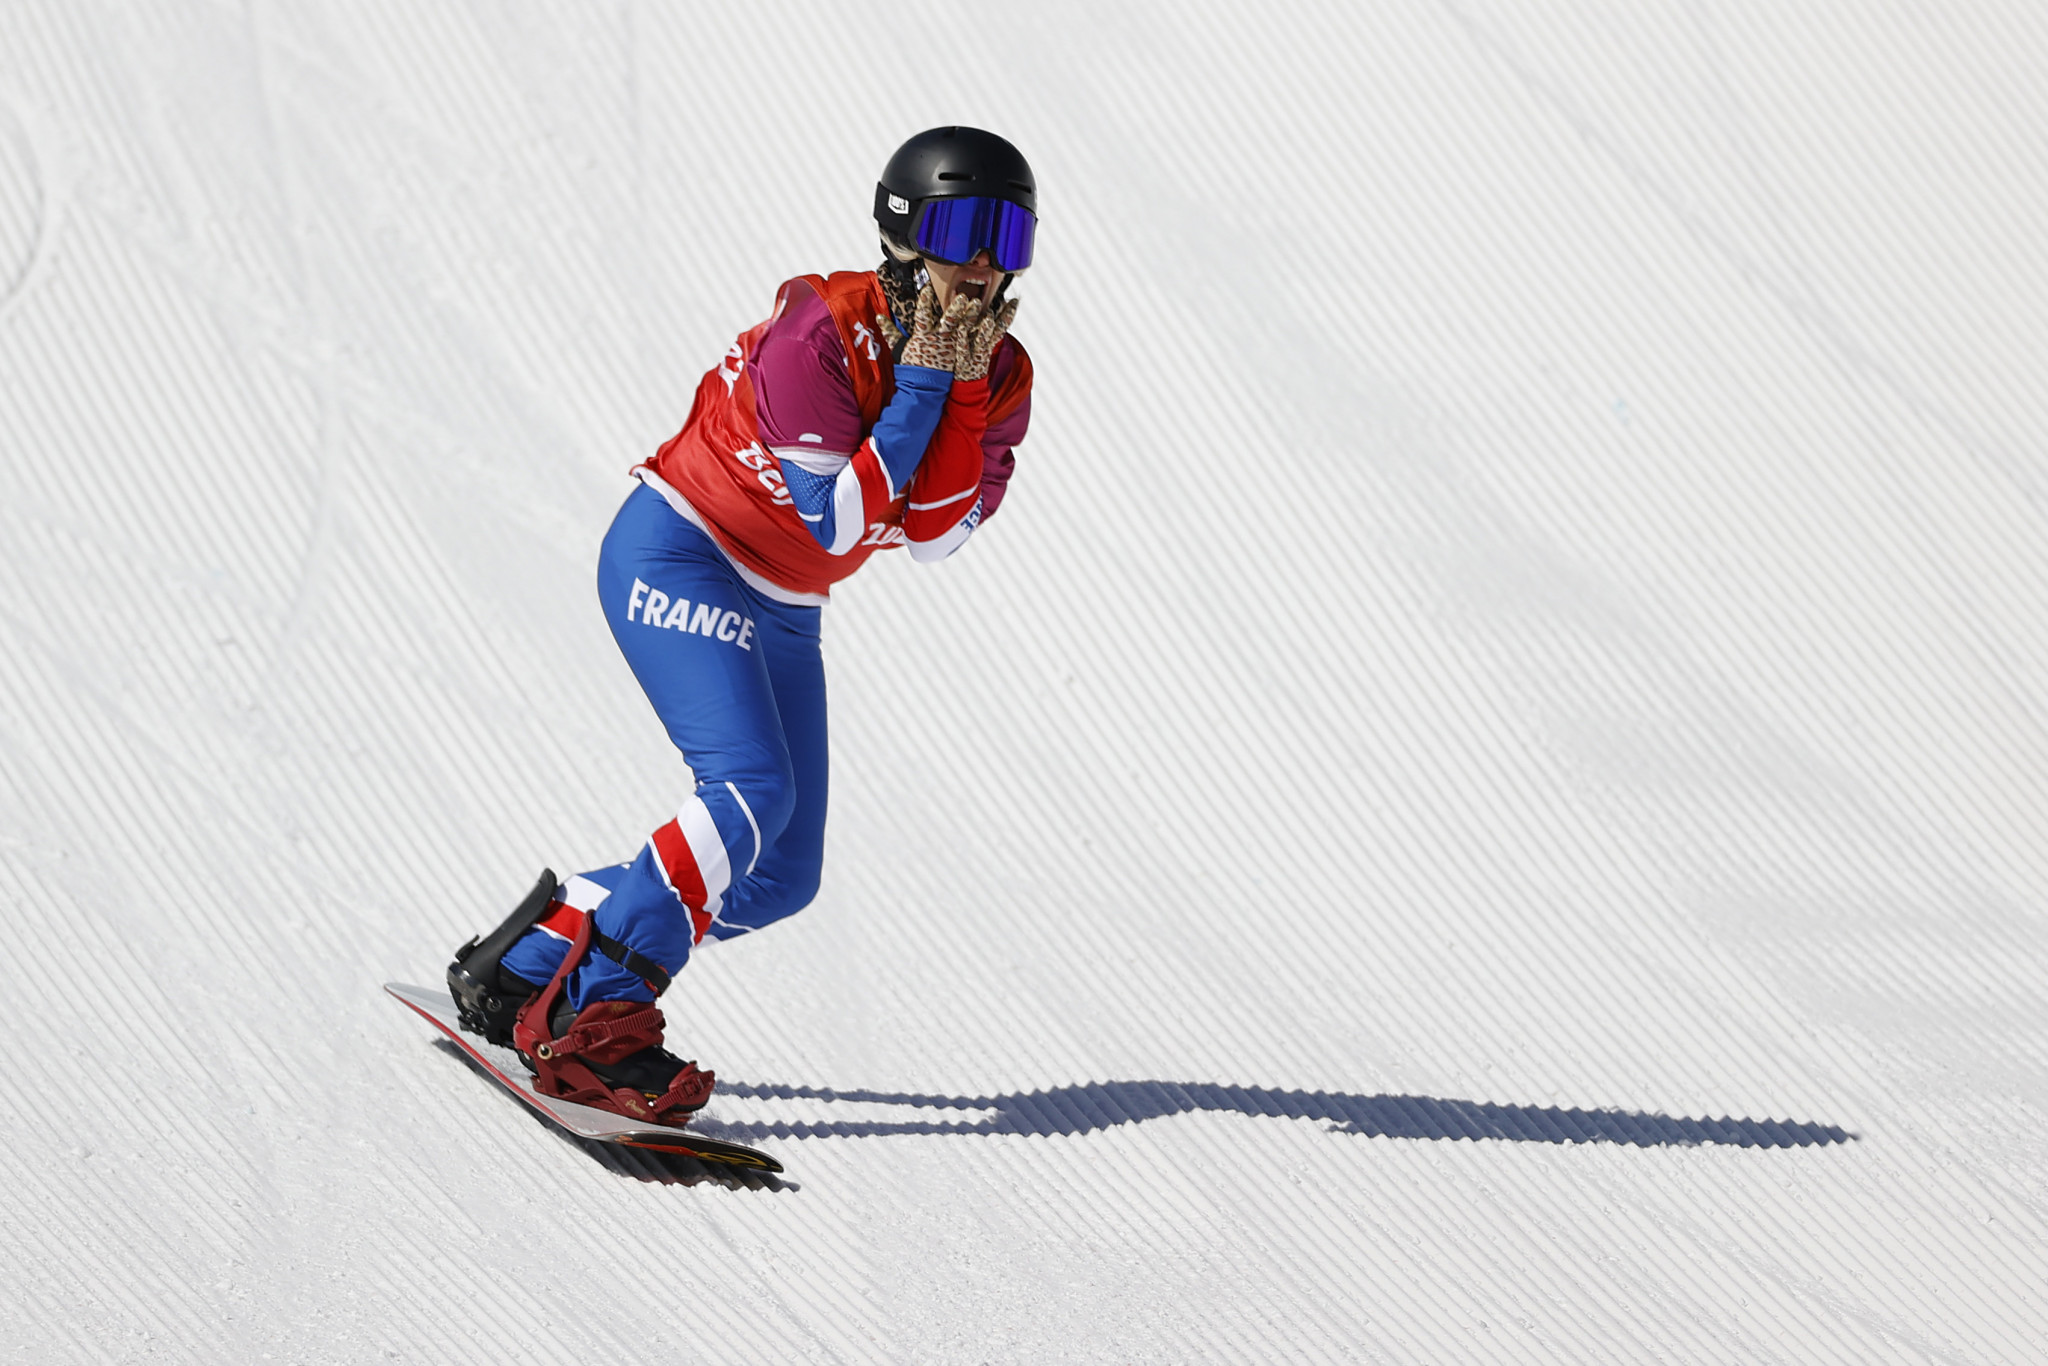 Hernandez takes snowboard cross gold at Beijing 2022 Winter Paralympics